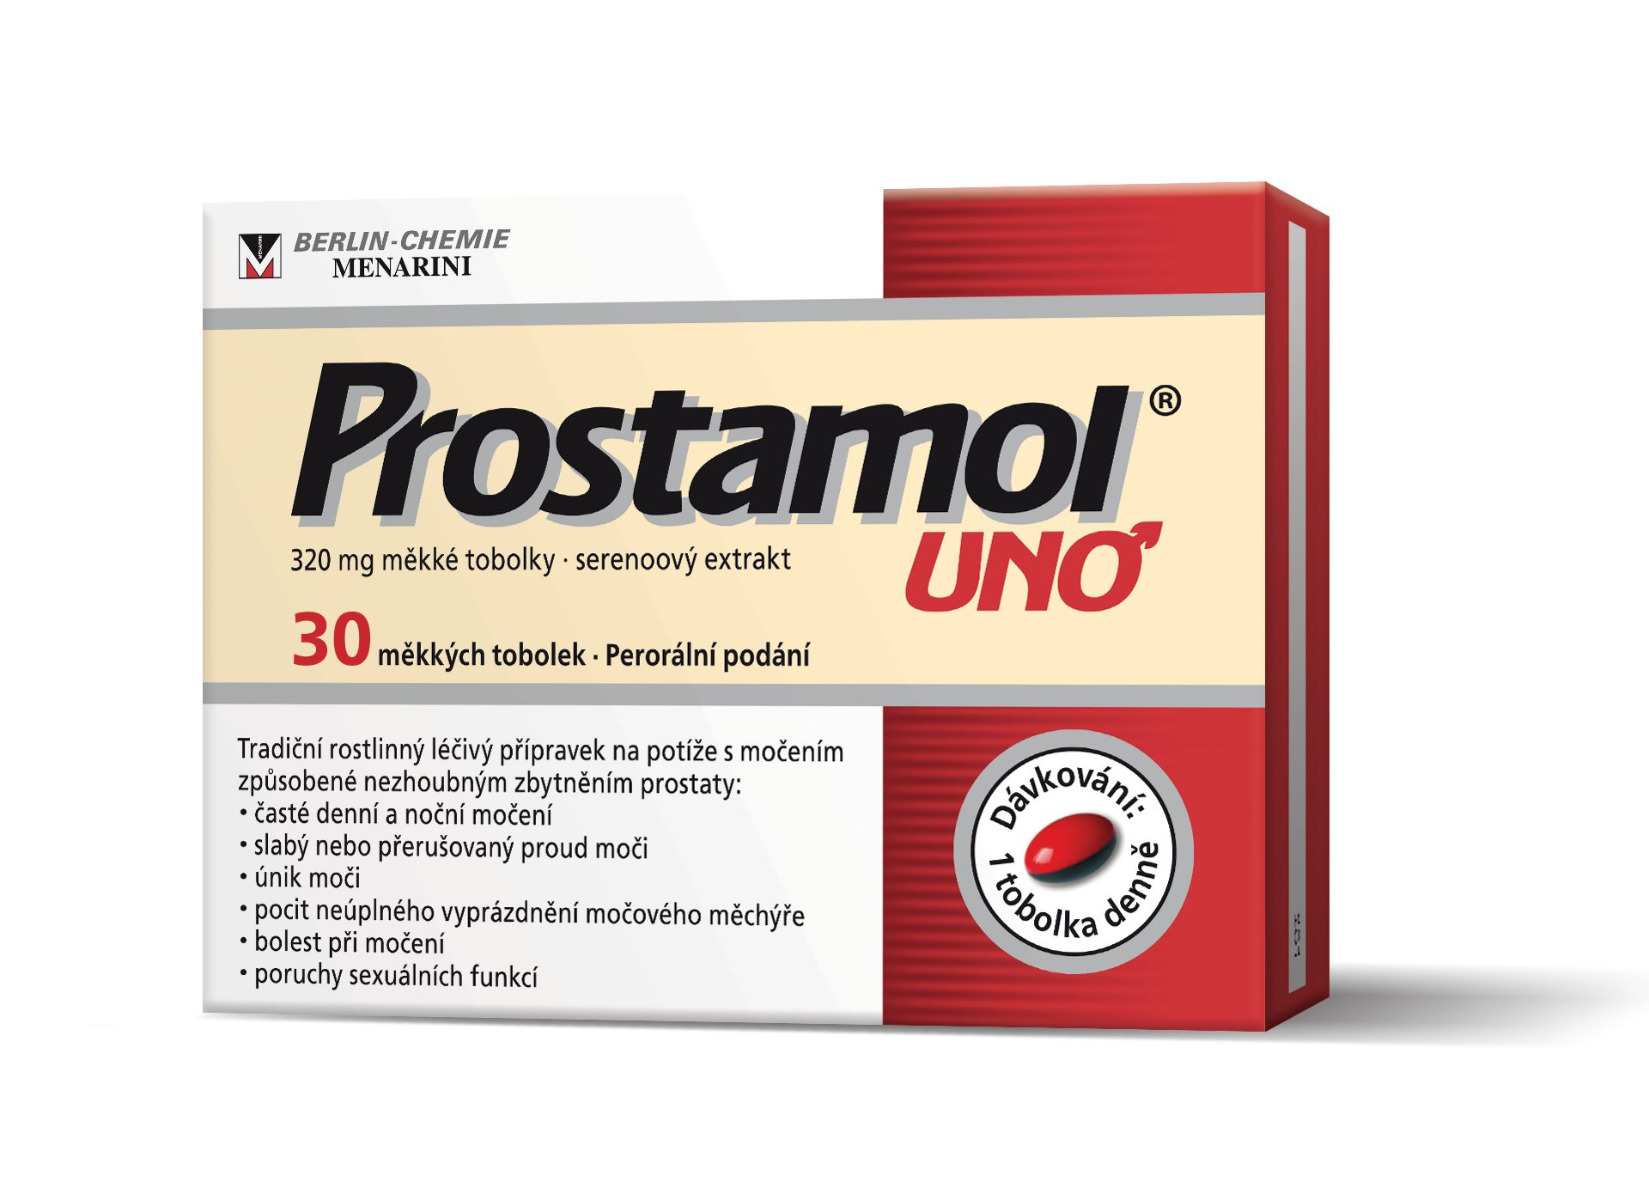 Prostamol uno 320 mg 30 měkkých tobolek Prostamol uno